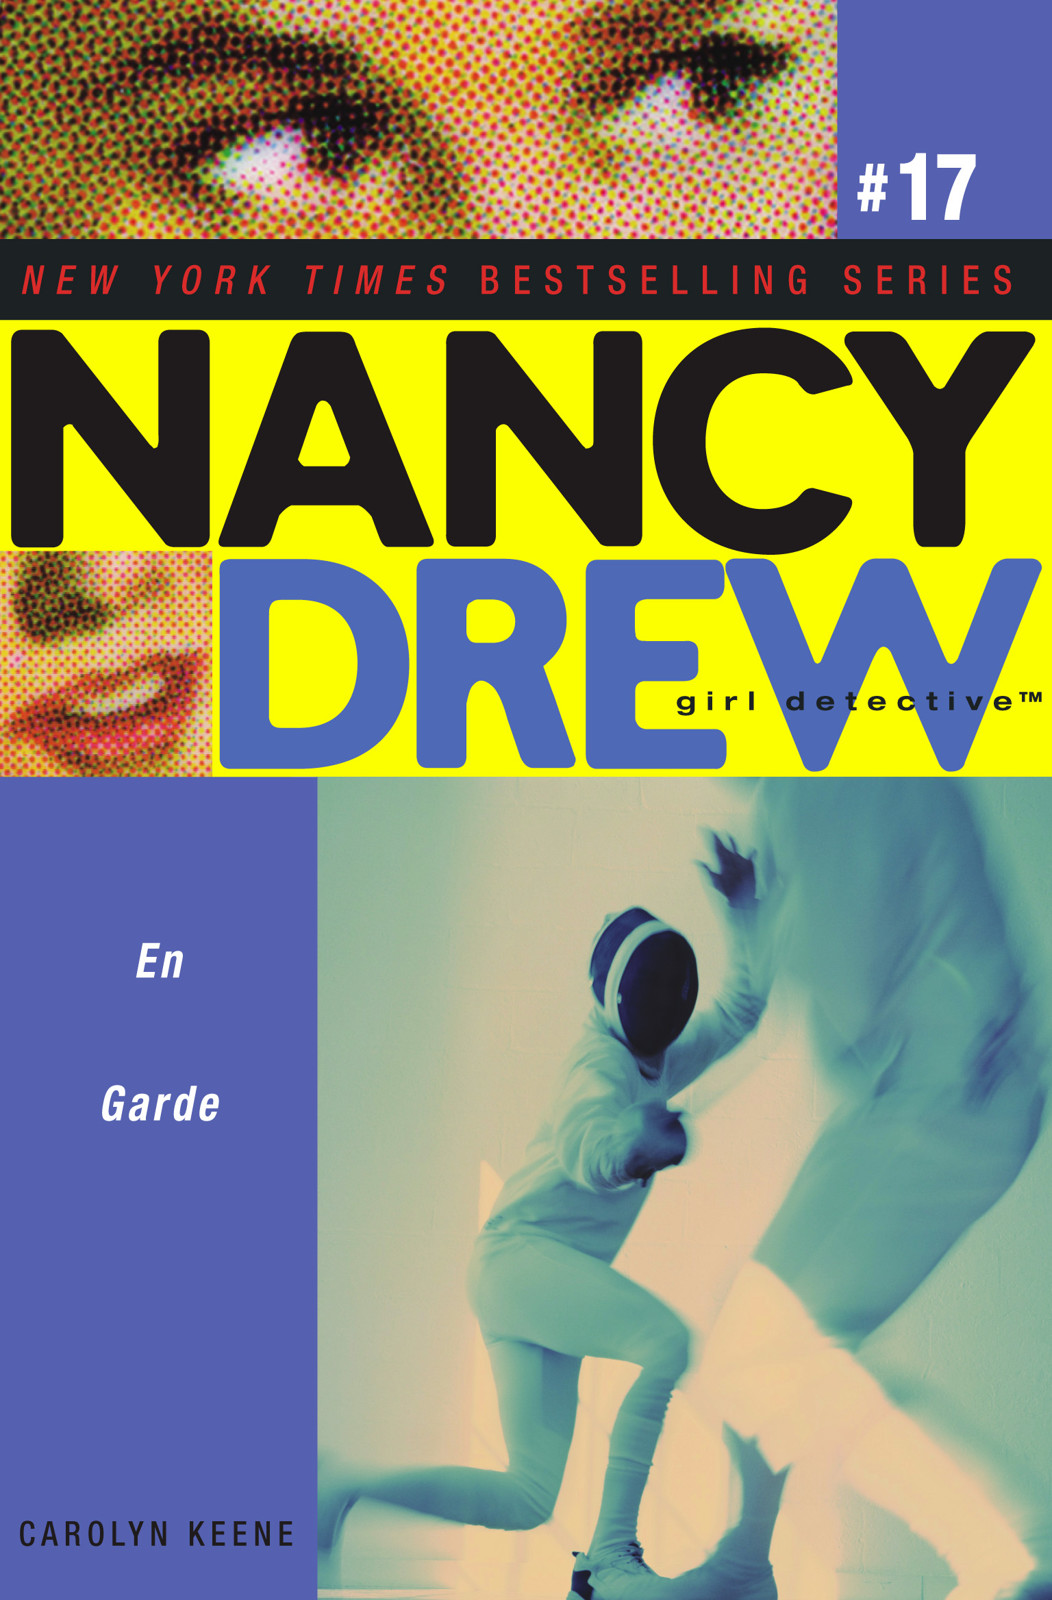 En Garde (Nancy Drew (All New) Girl Detective Book 17) by Carolyn Keene